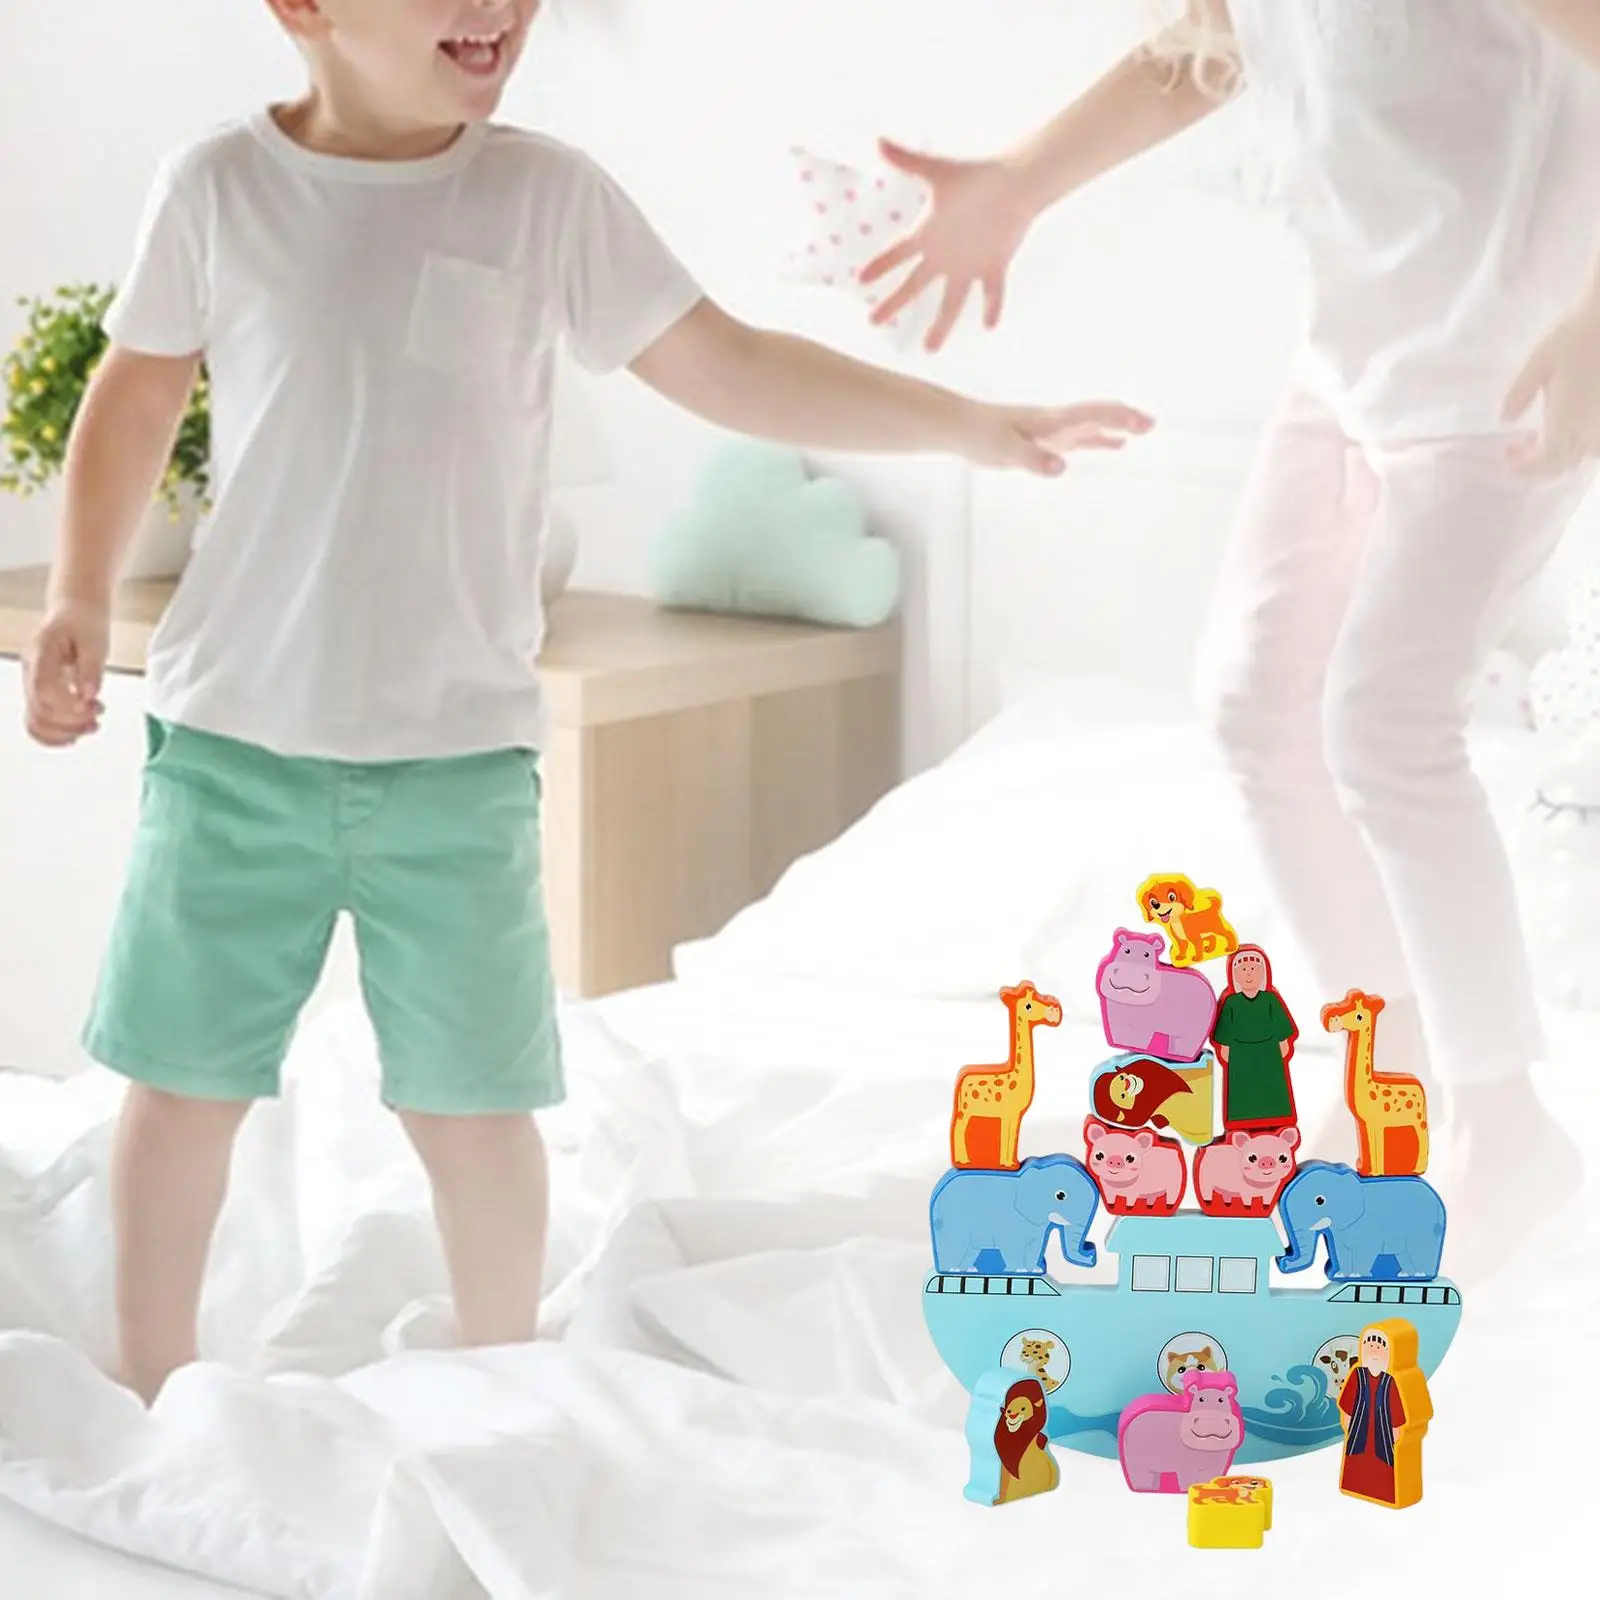 Montessori Wooden Blocks Animal Toys Educational Toys Preschool Game Motor Skills Brain Development for Kids Birthday Gifts